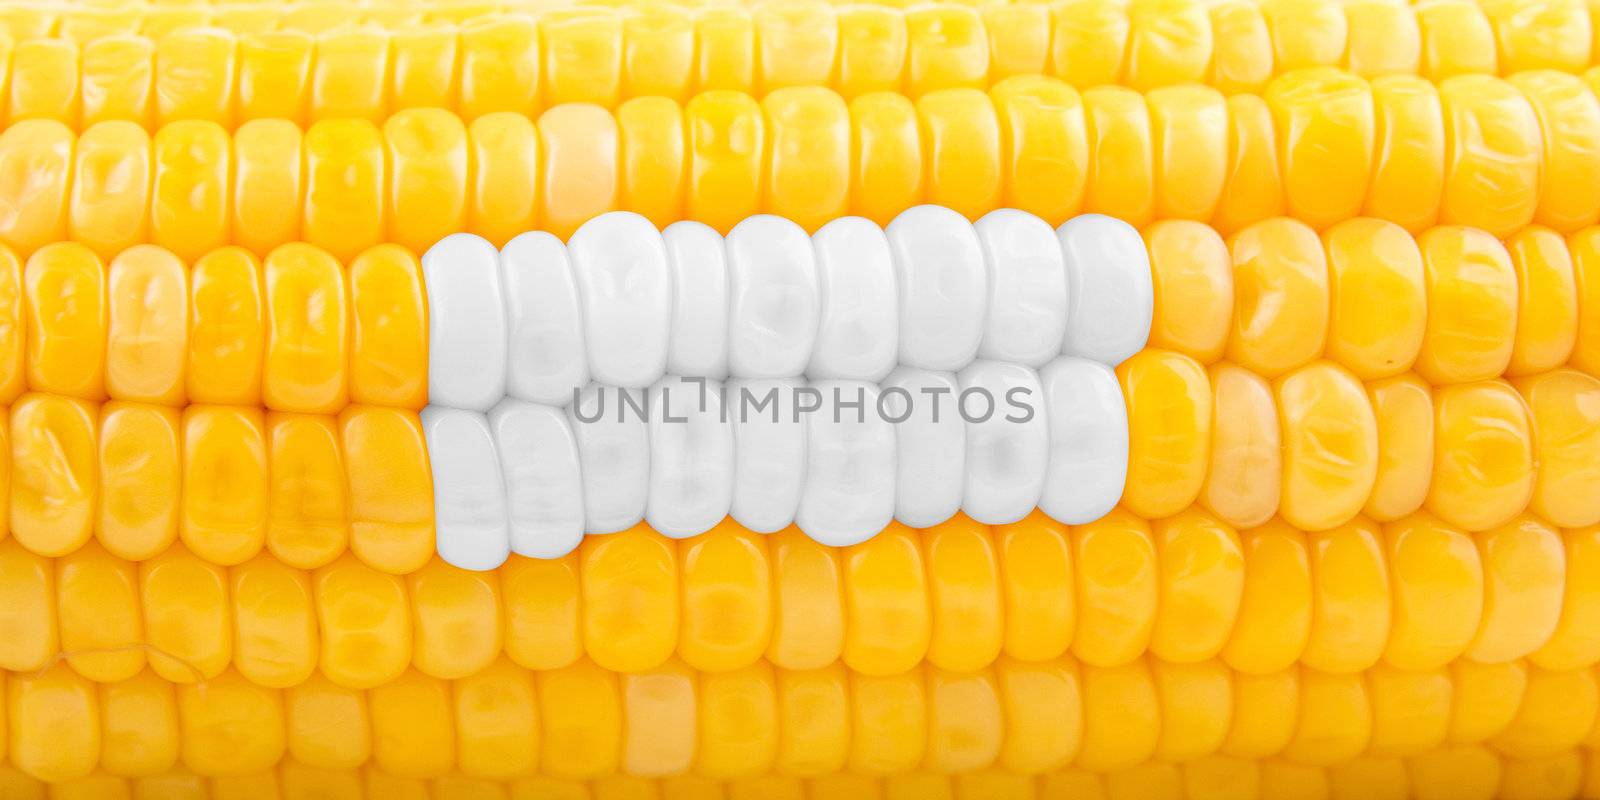 Stomatology concept of ripe yellow corn as teeth